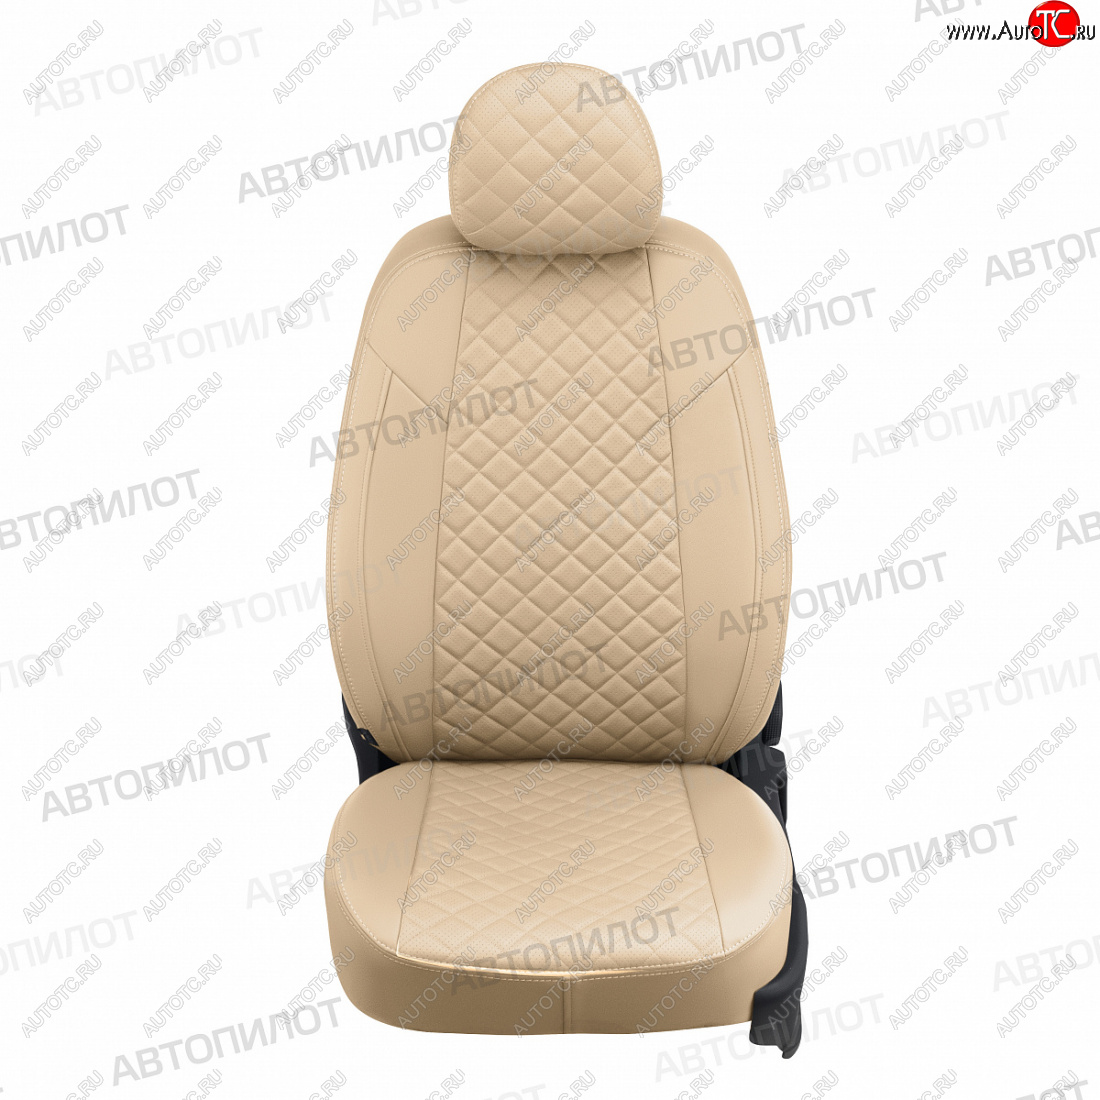 13 999 р. Чехлы сидений (экокожа) Автопилот Ромб  Hyundai Sonata  EF (2001-2013), KIA Magentis (2000-2005) (бежевый)